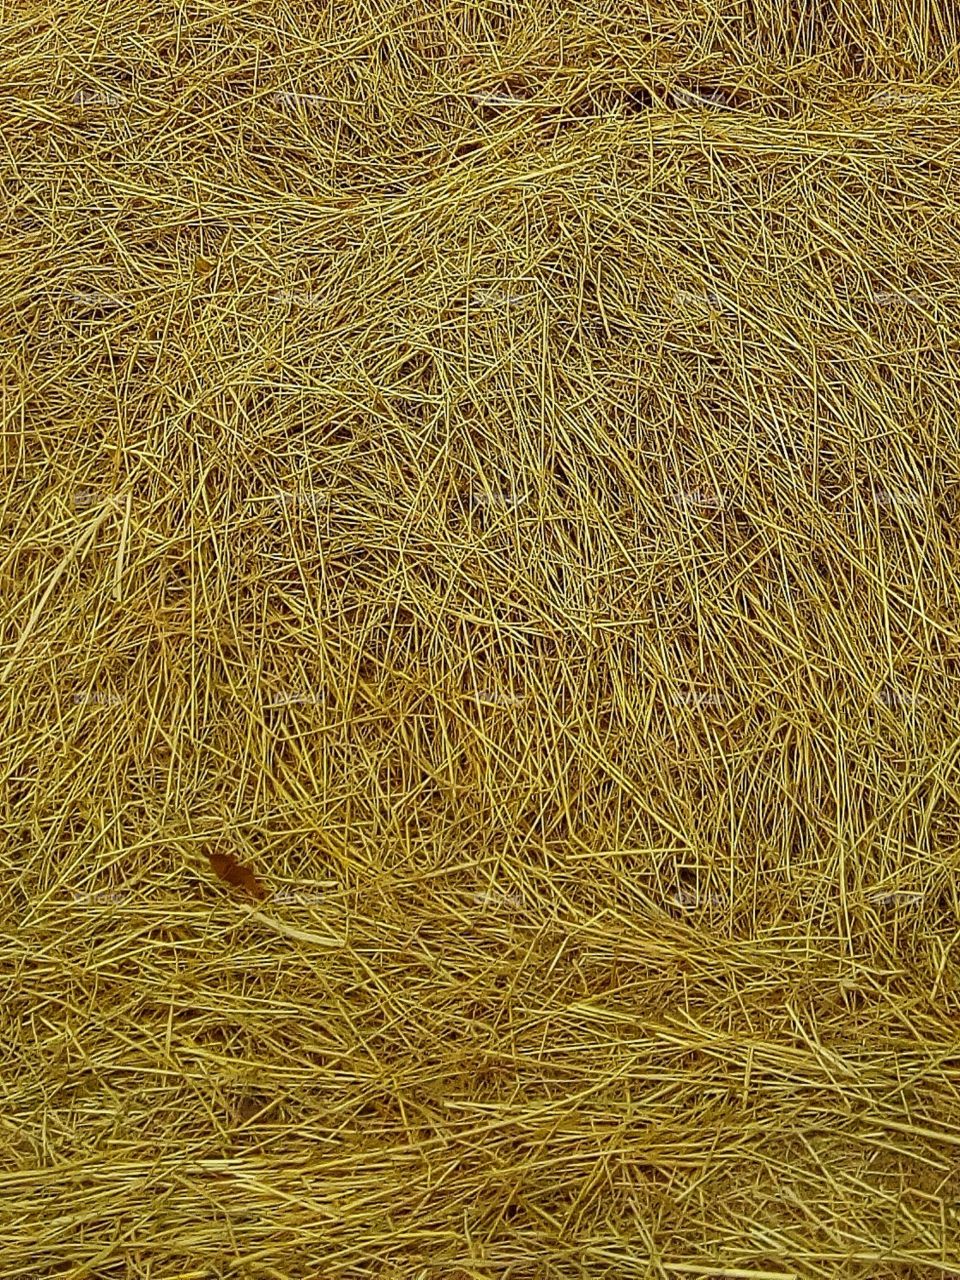 Straw heap, scene, yellow, pile on, harvest background, farmer